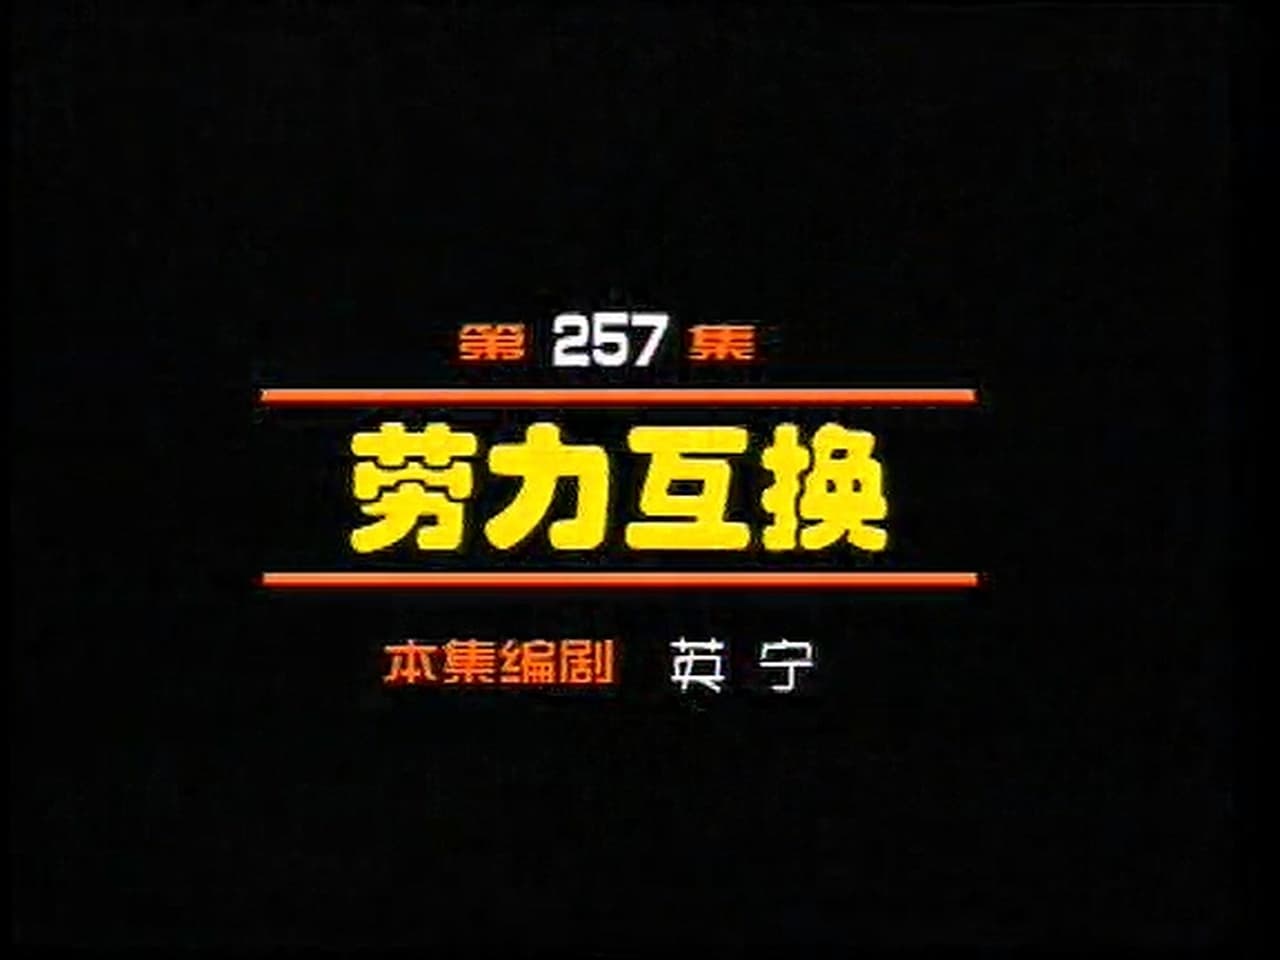 Episode 257